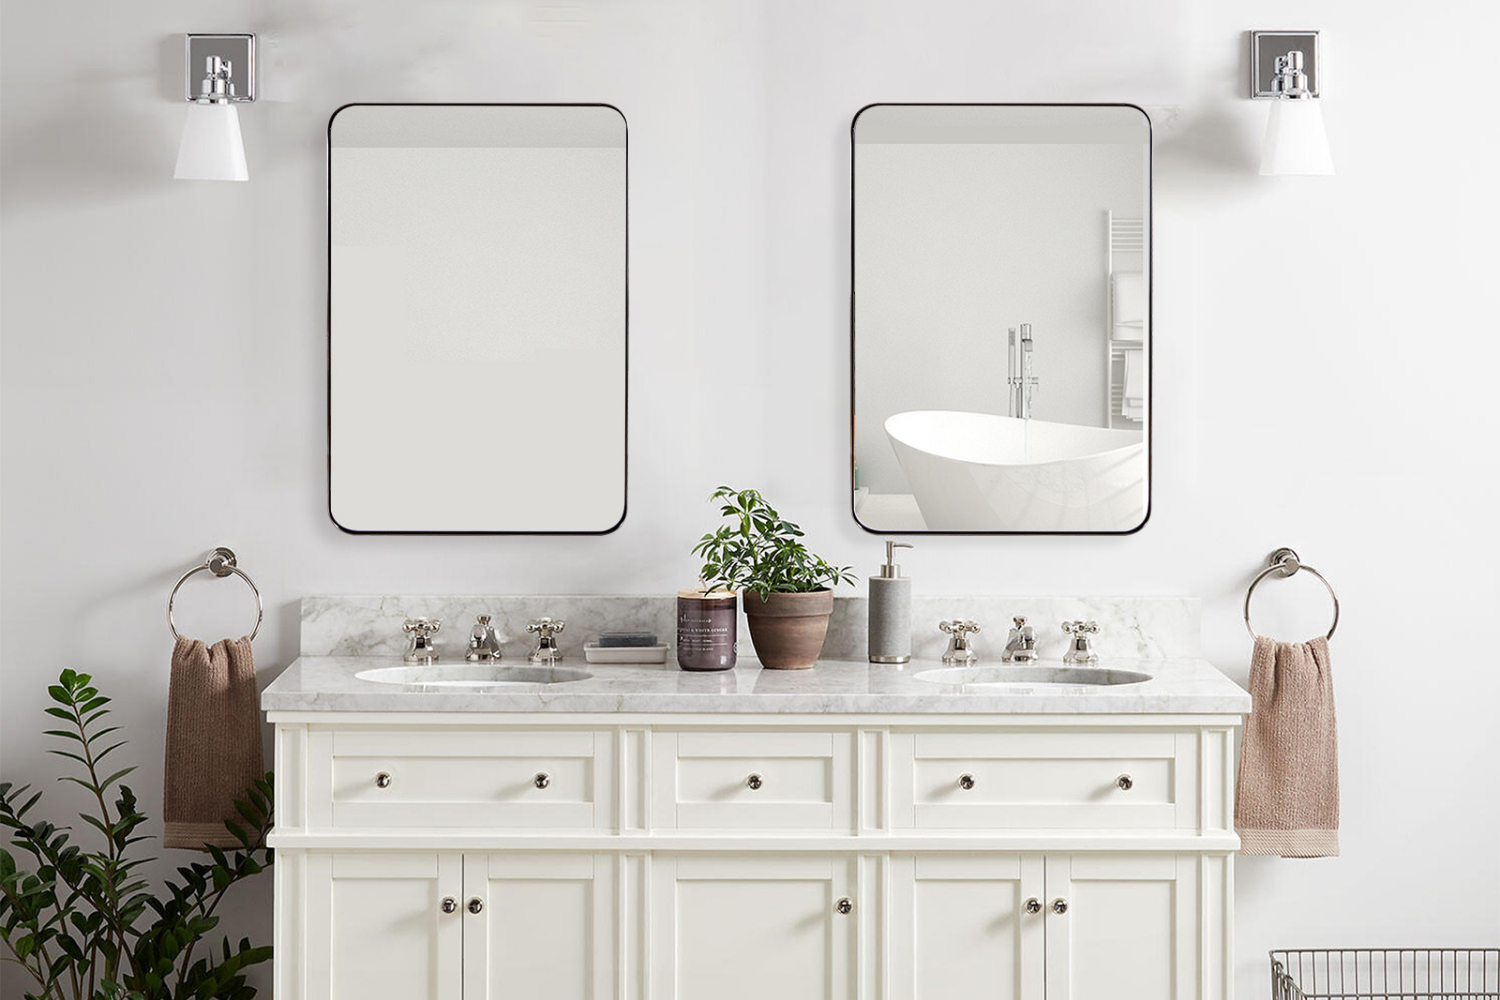 Twinning Is Winning- 5 Double Mirror Ideas for a Beautiful& Functional Bathroom